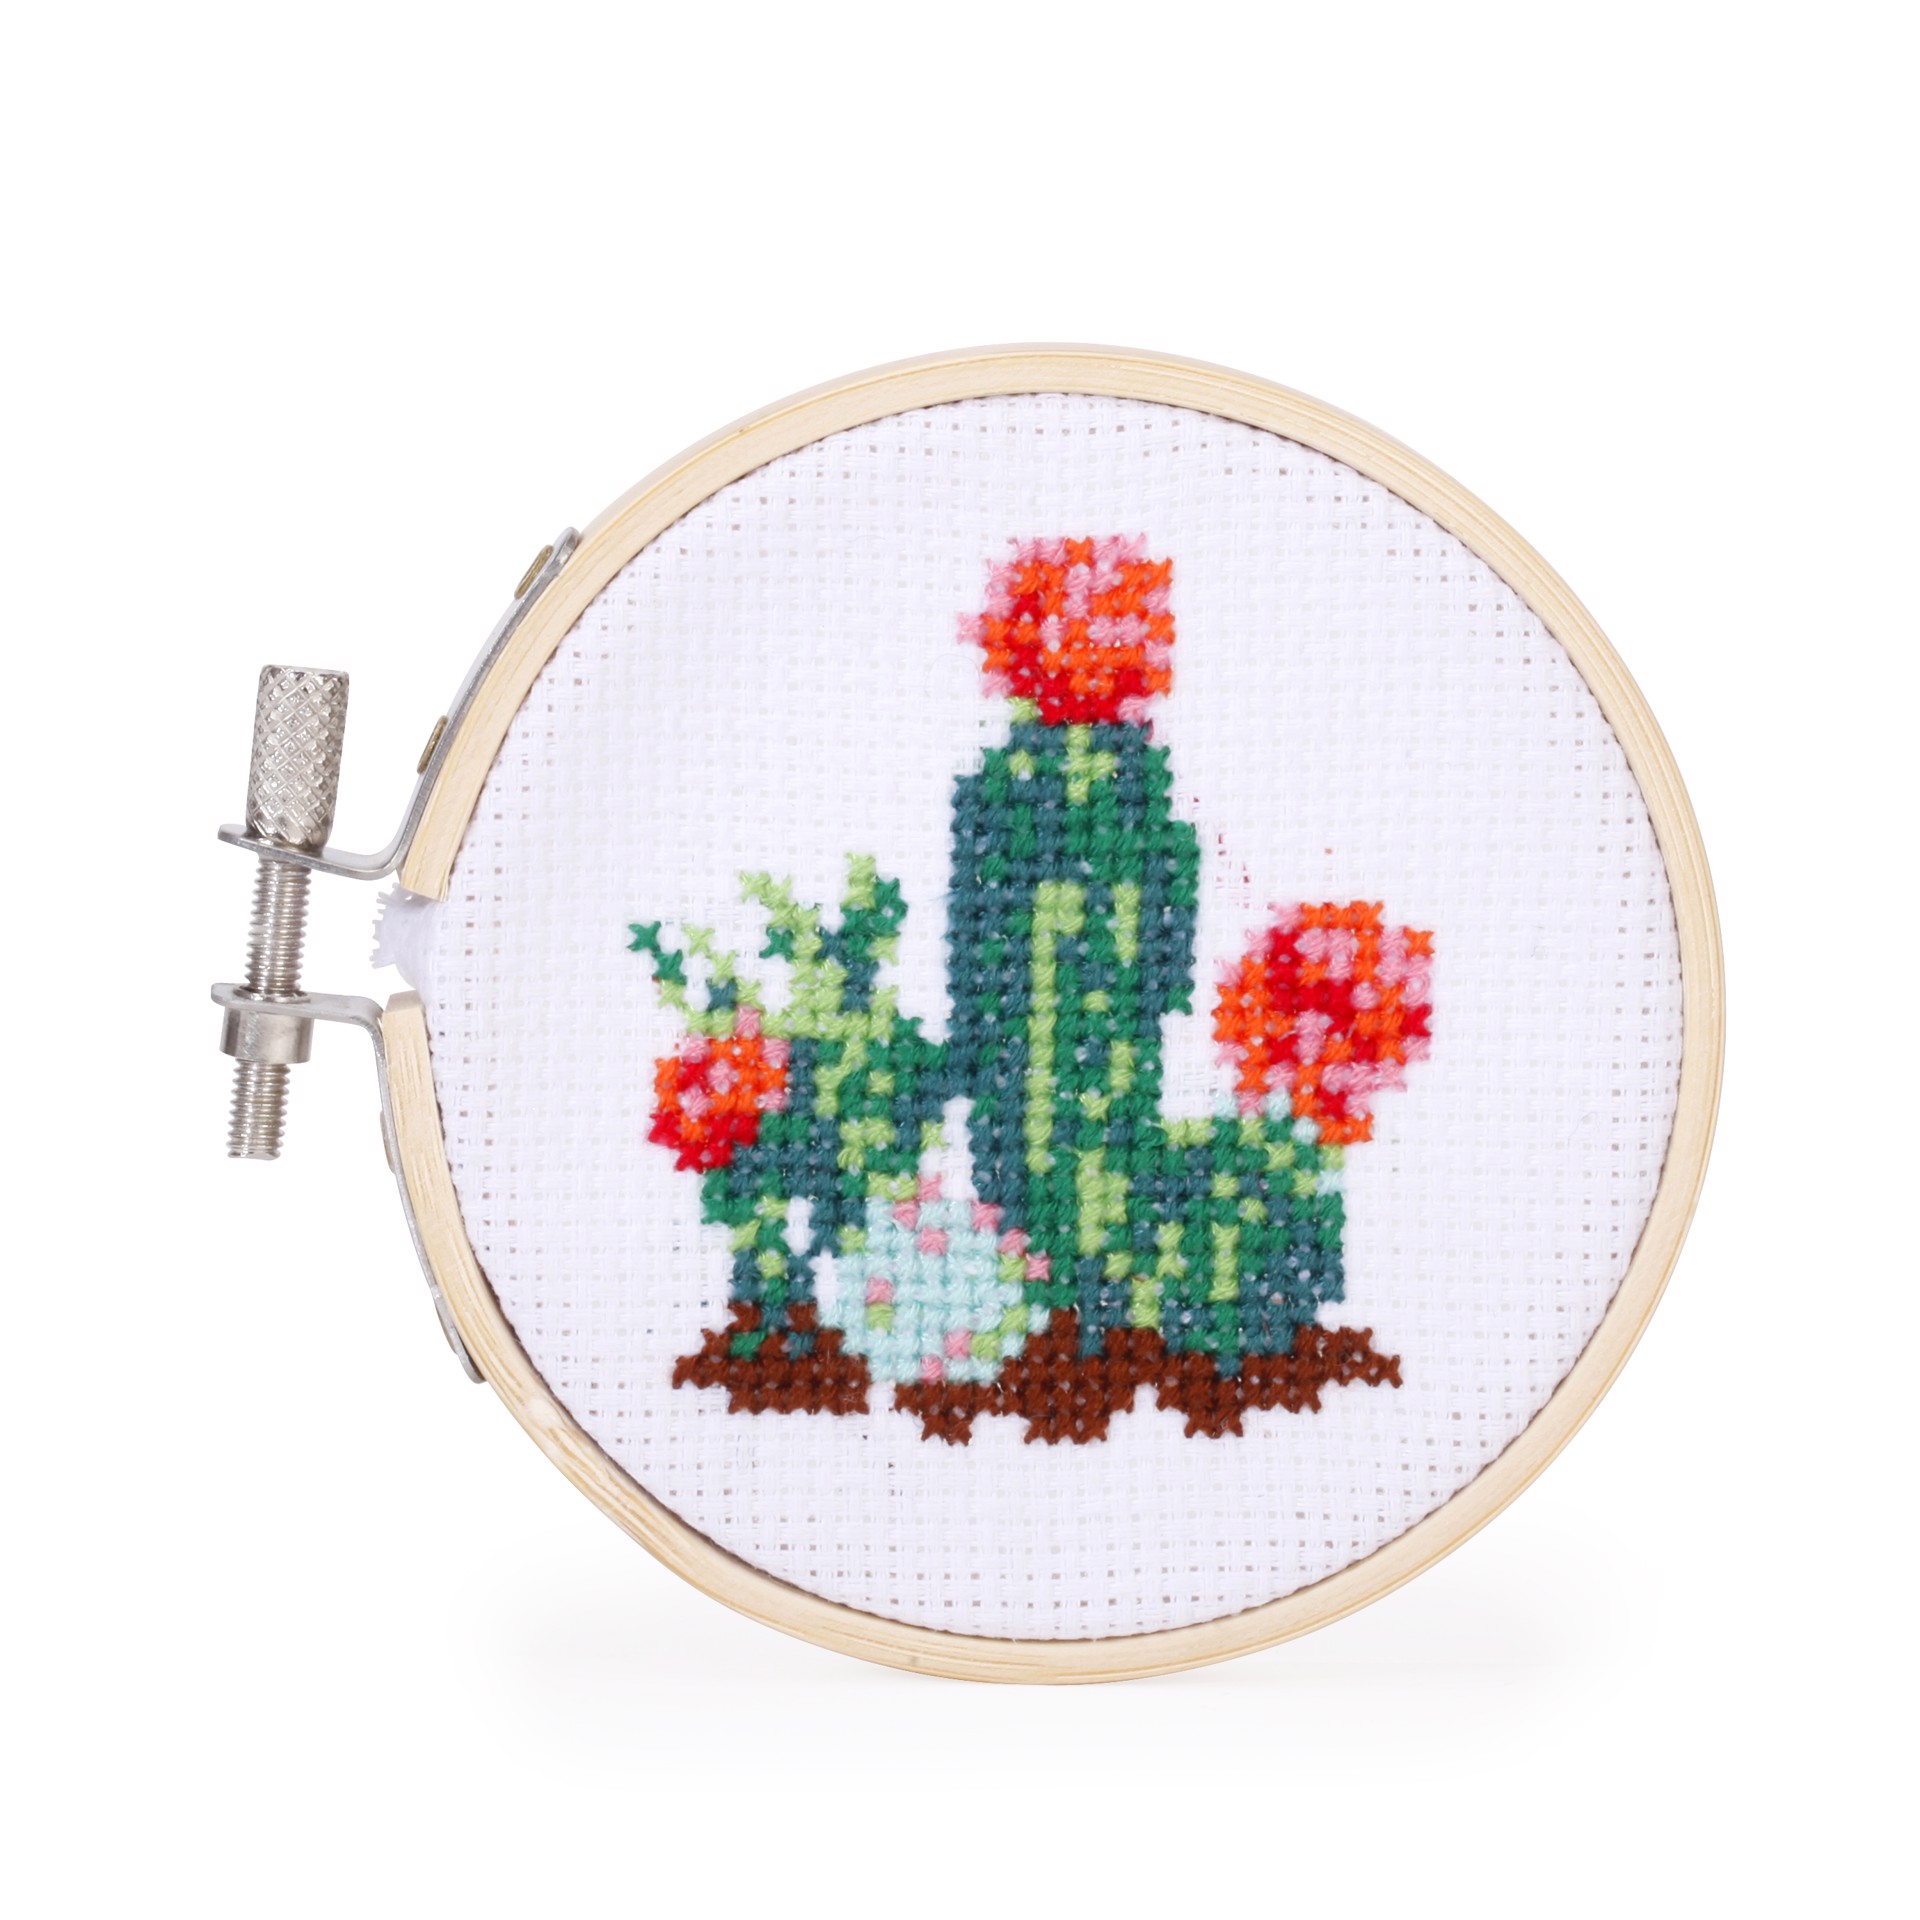 Mini Cross Stitch Kit - Cactus by Chauvet Arts